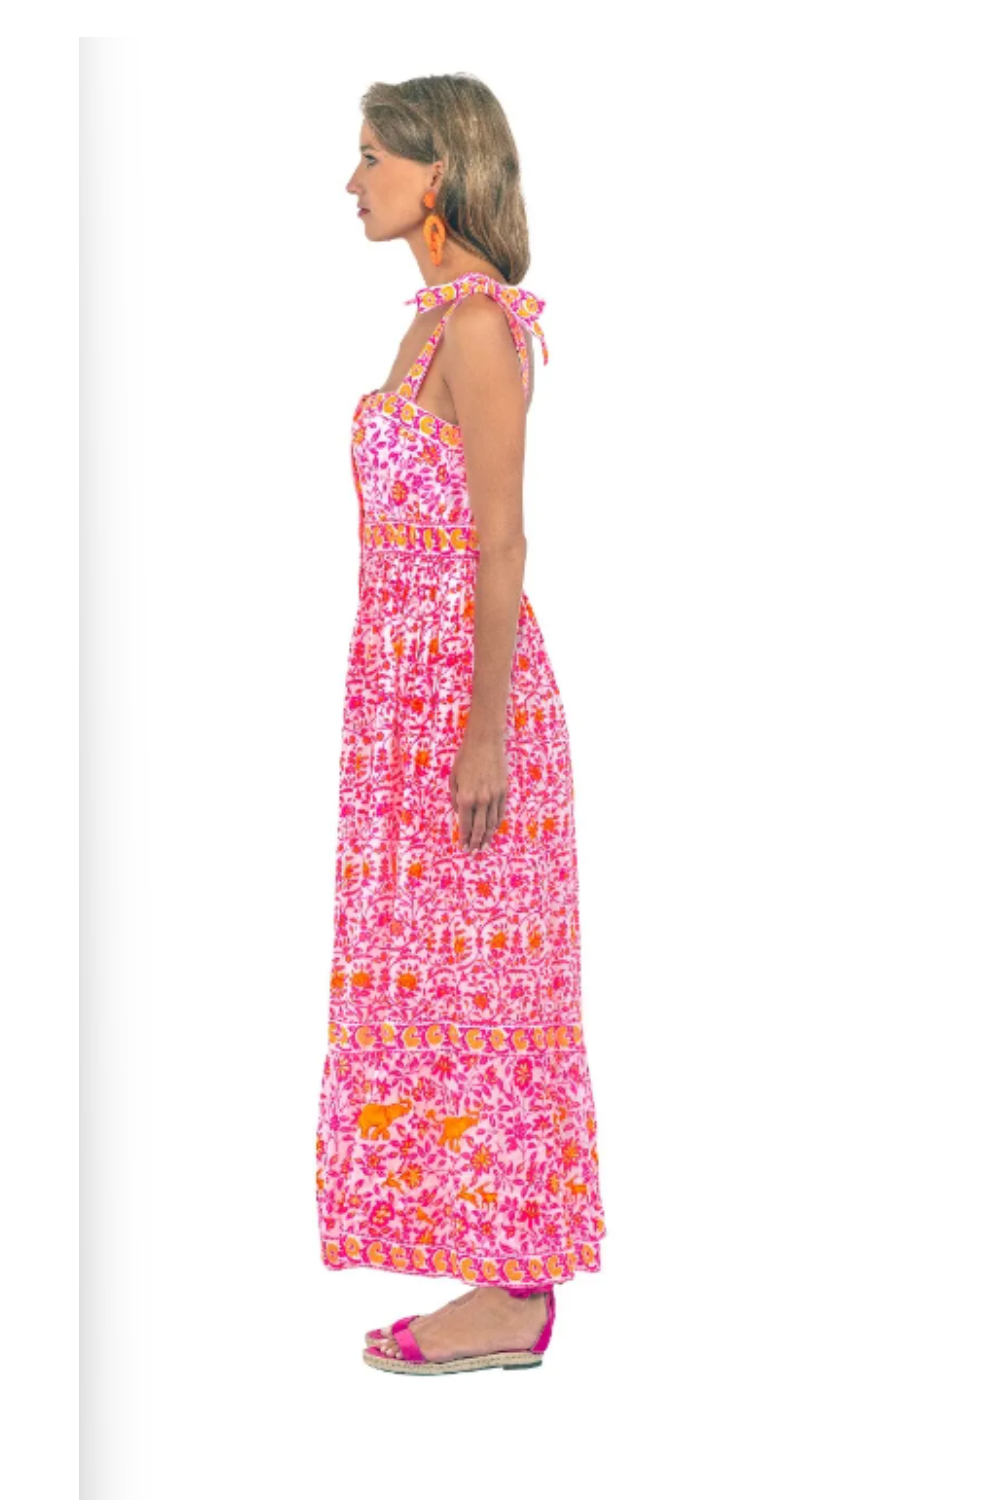 Gretchen Scott Samode East India Dress - Pink/Orange